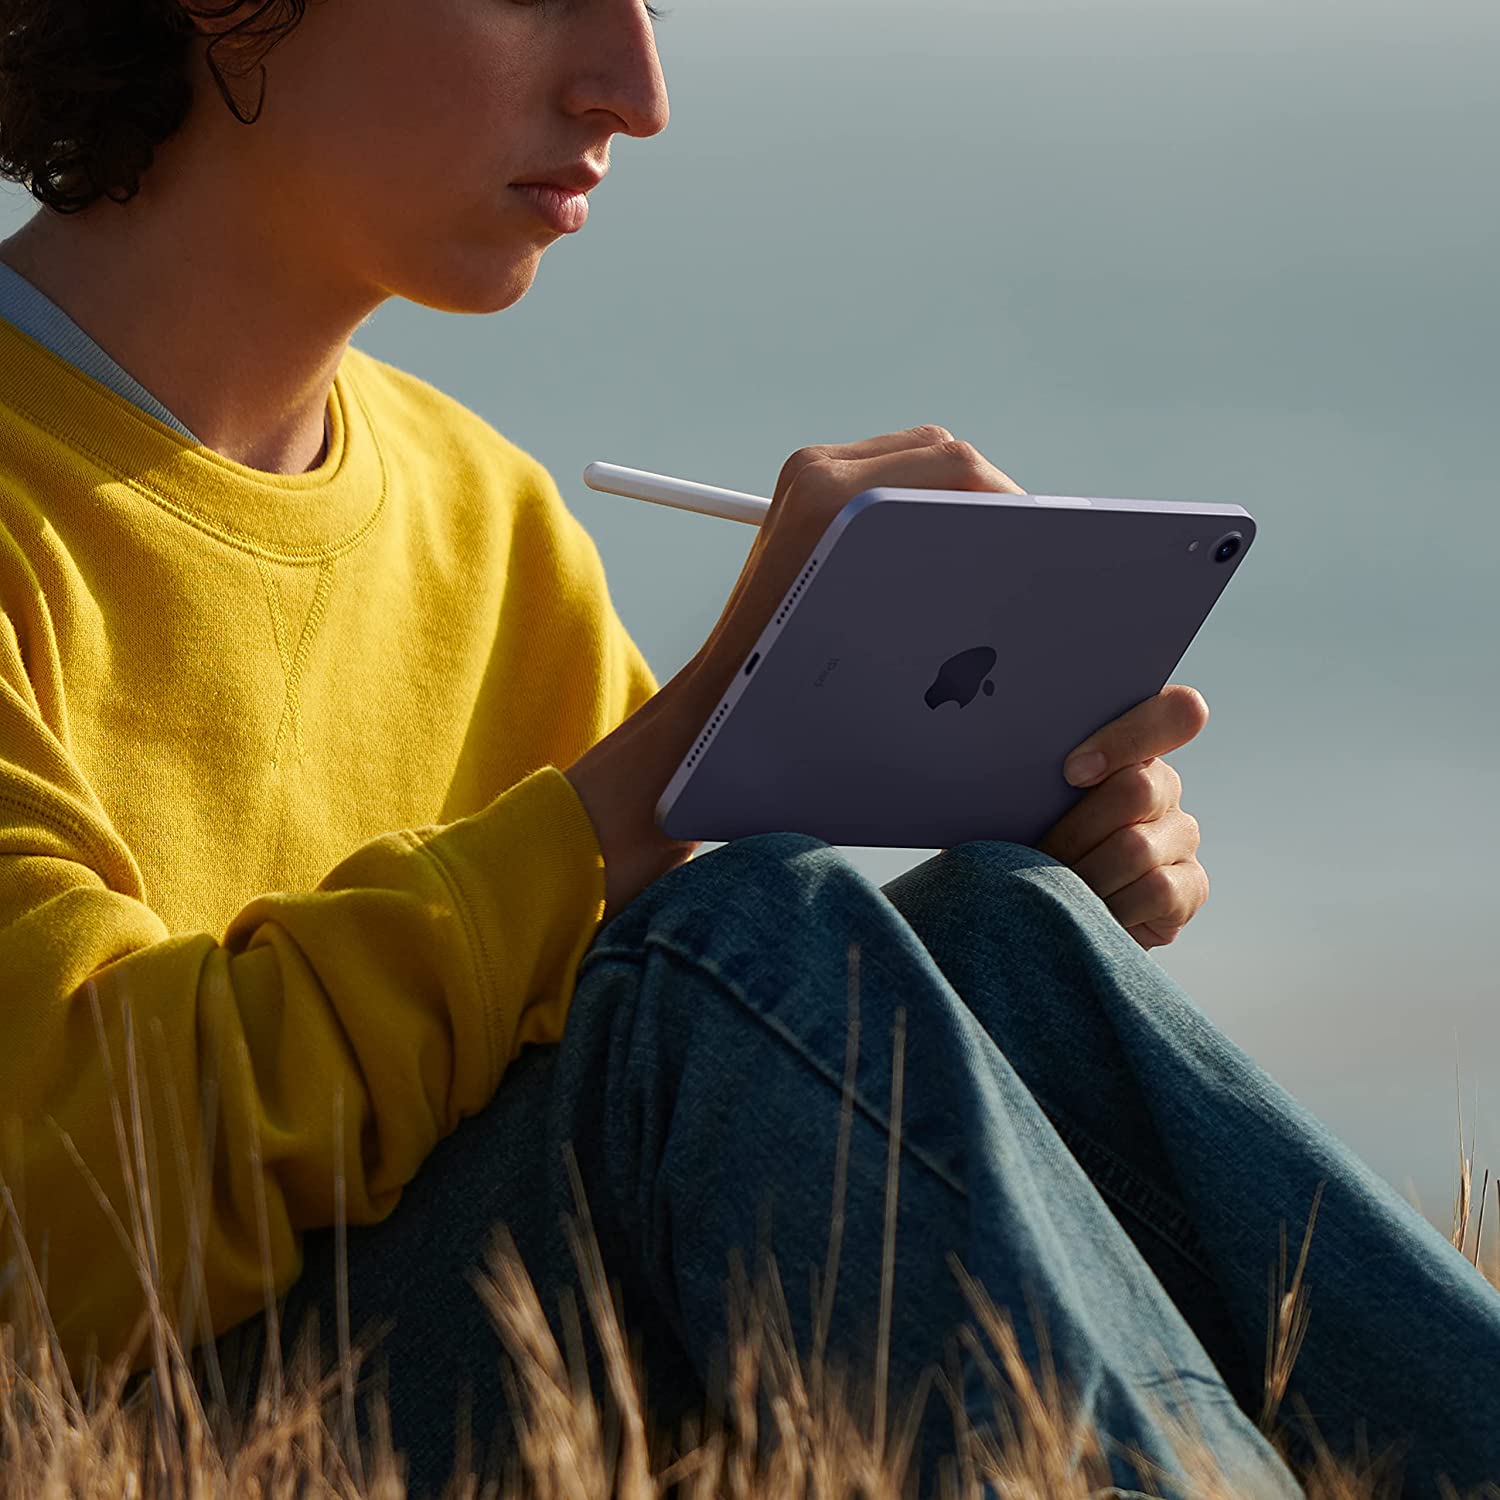 Apple iPad Mini 6 (256GB, Wi-Fi, Pink) Bundle with Black Floral Sleeve